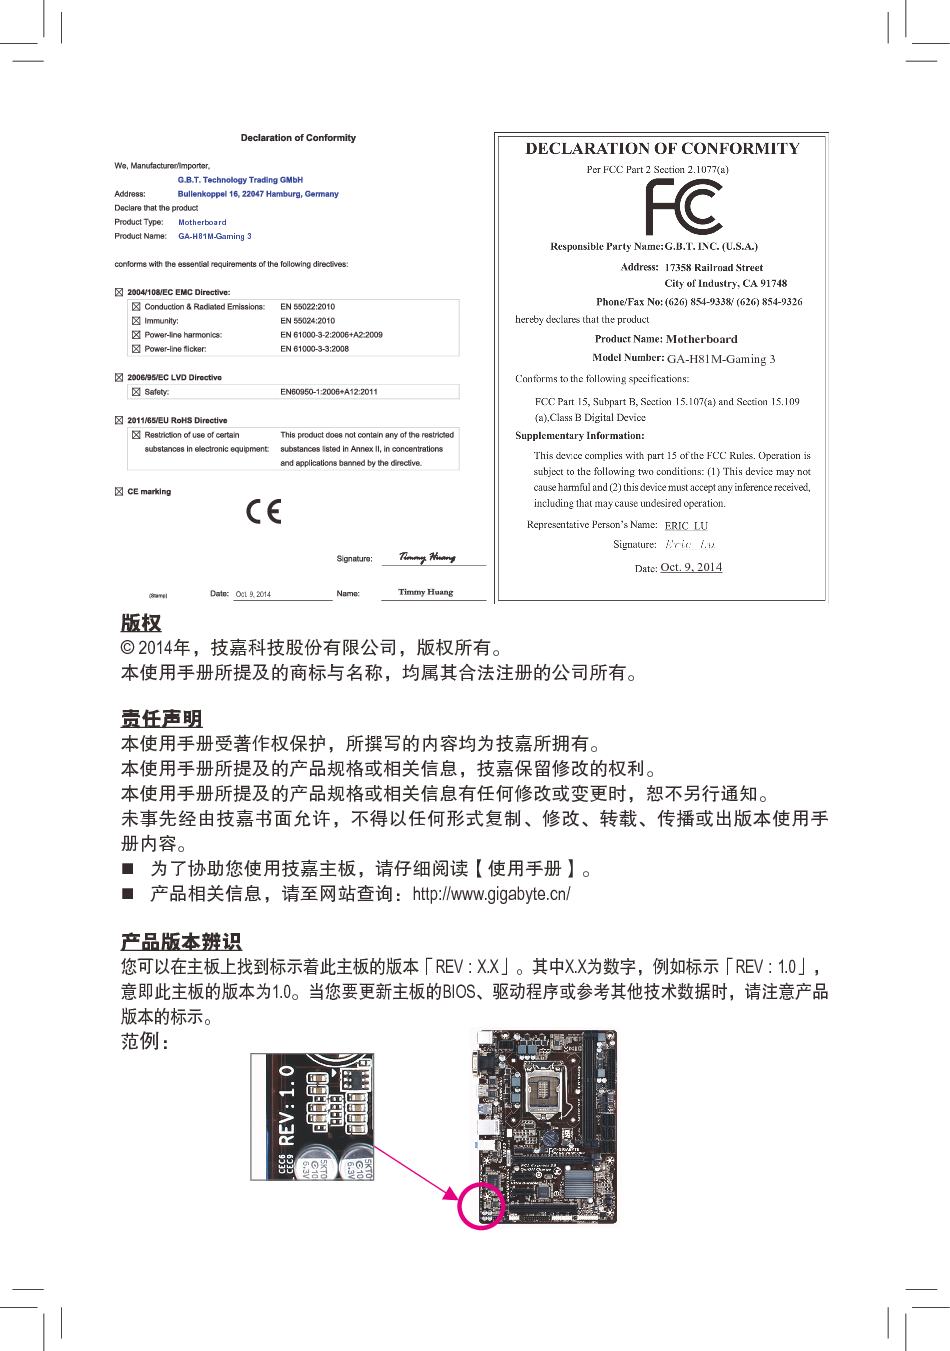 技嘉 Gigabyte GA-H81M-Gaming 3 使用手册 第1页